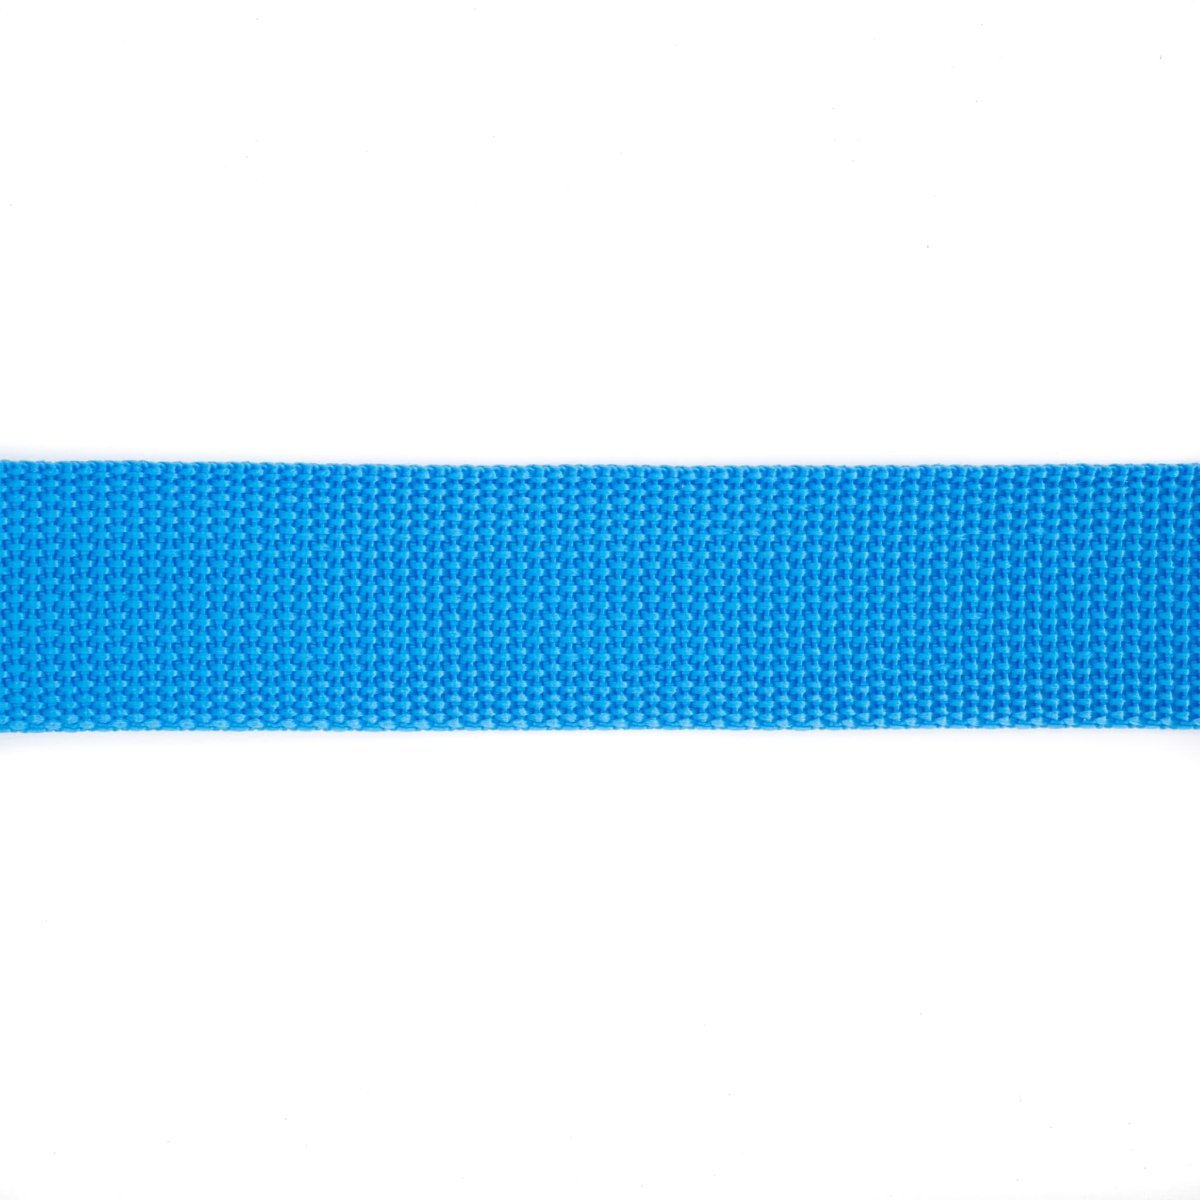 Tassenband | Nylon | 30 mm - hemel blauw Tassenband TASSENBAND-NYLON-30-HEMEL BLAUW